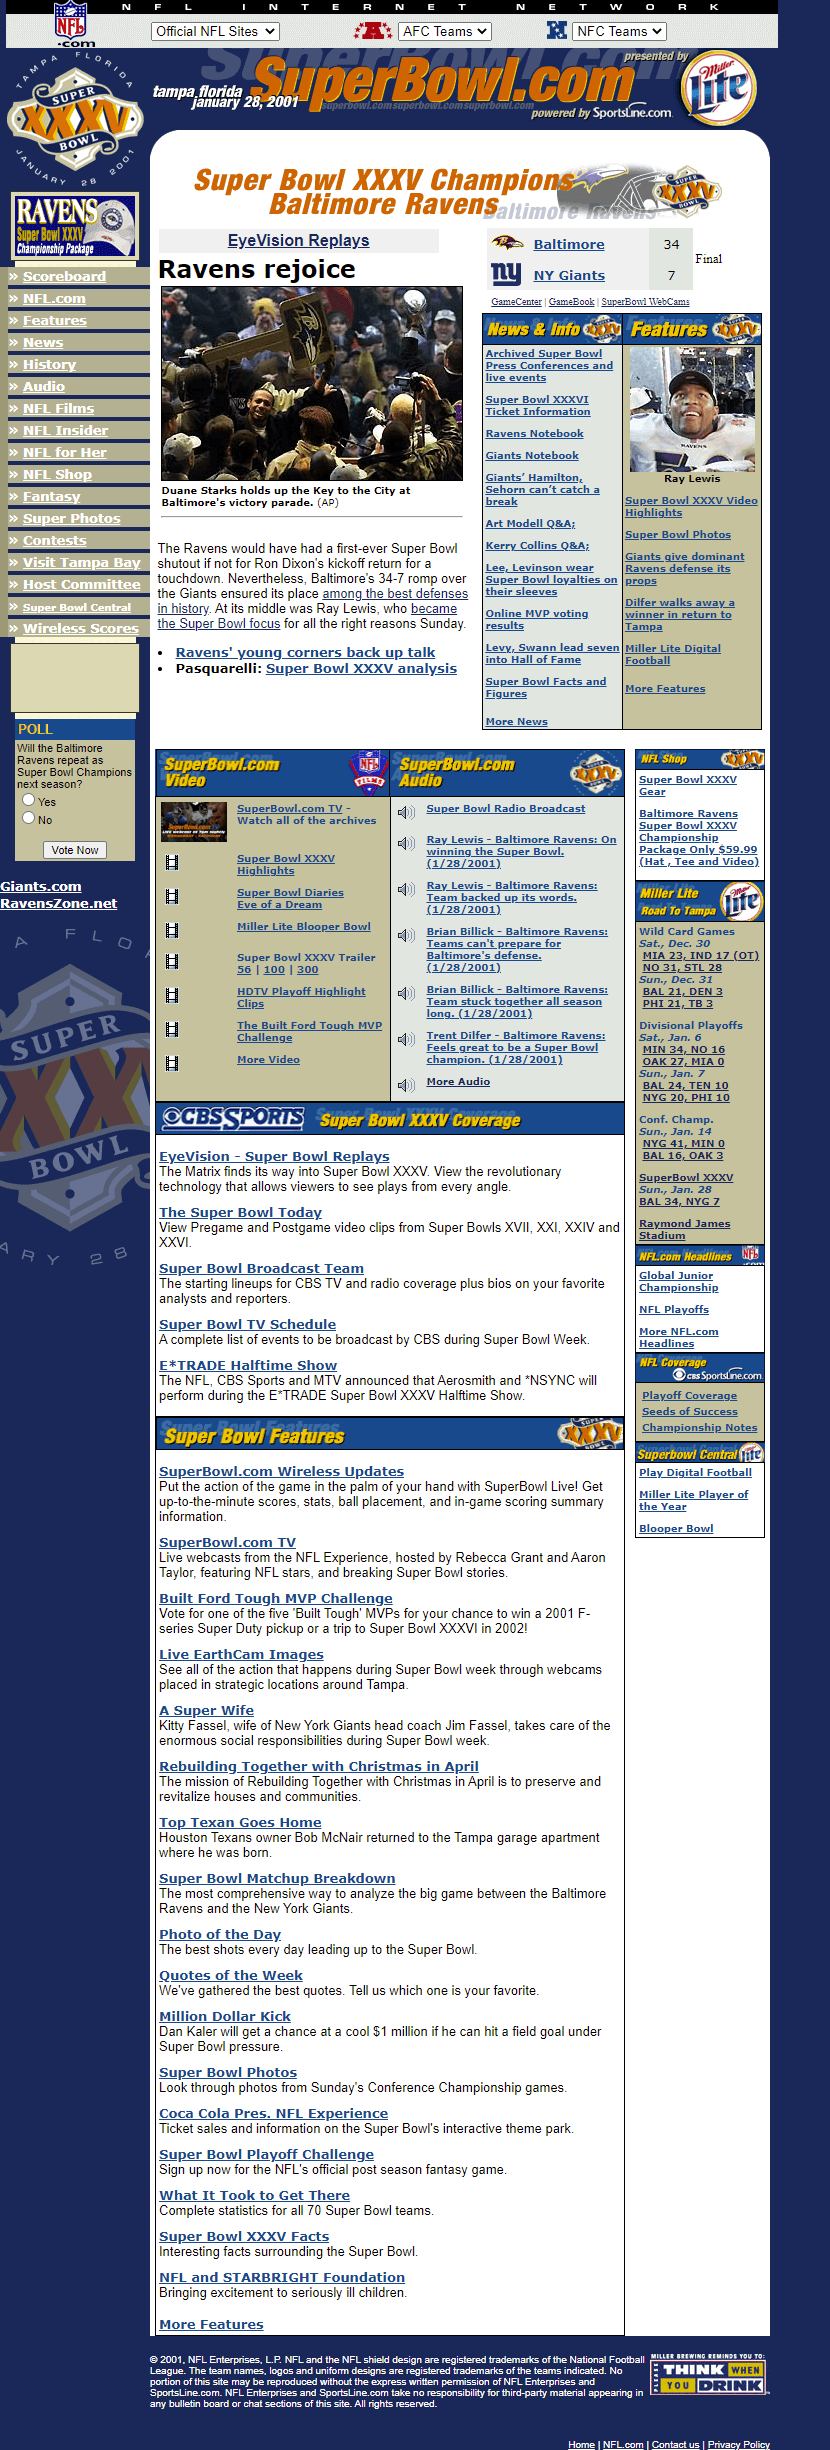 SuperBowl.com in 2001